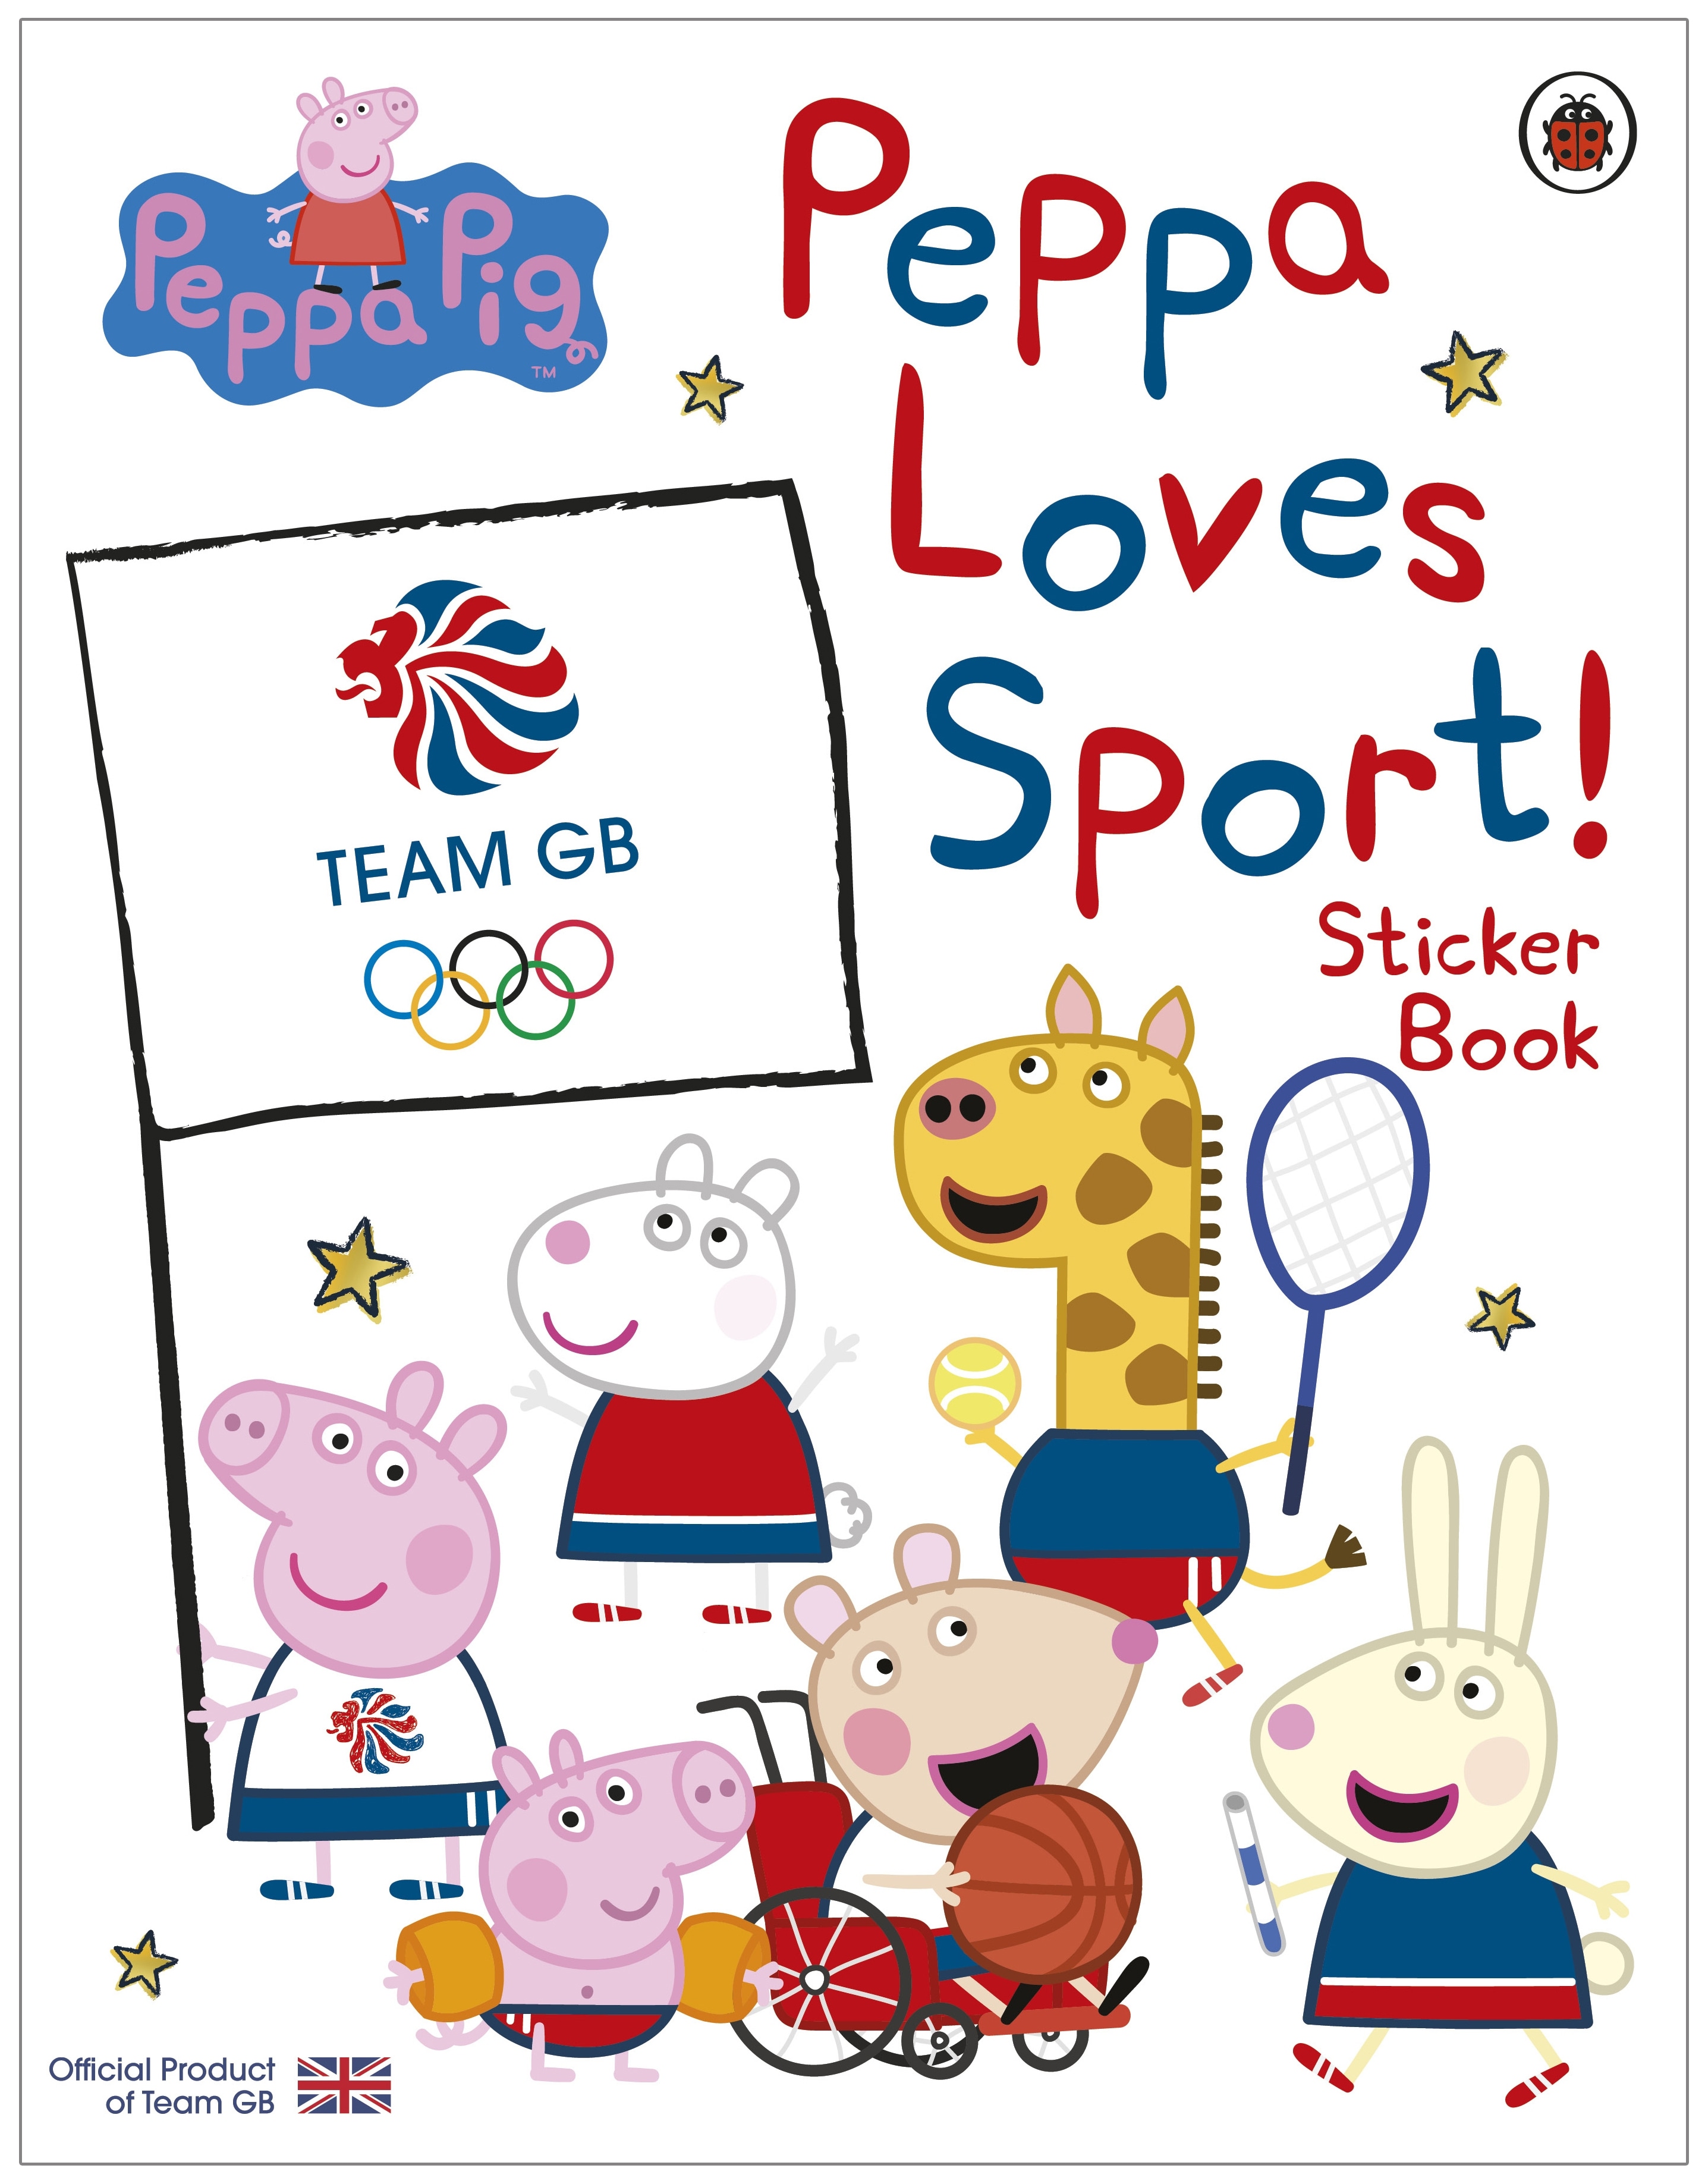 Book “Peppa Pig: Peppa Loves Sport! Sticker Book” by Peppa Pig — June 10, 2021